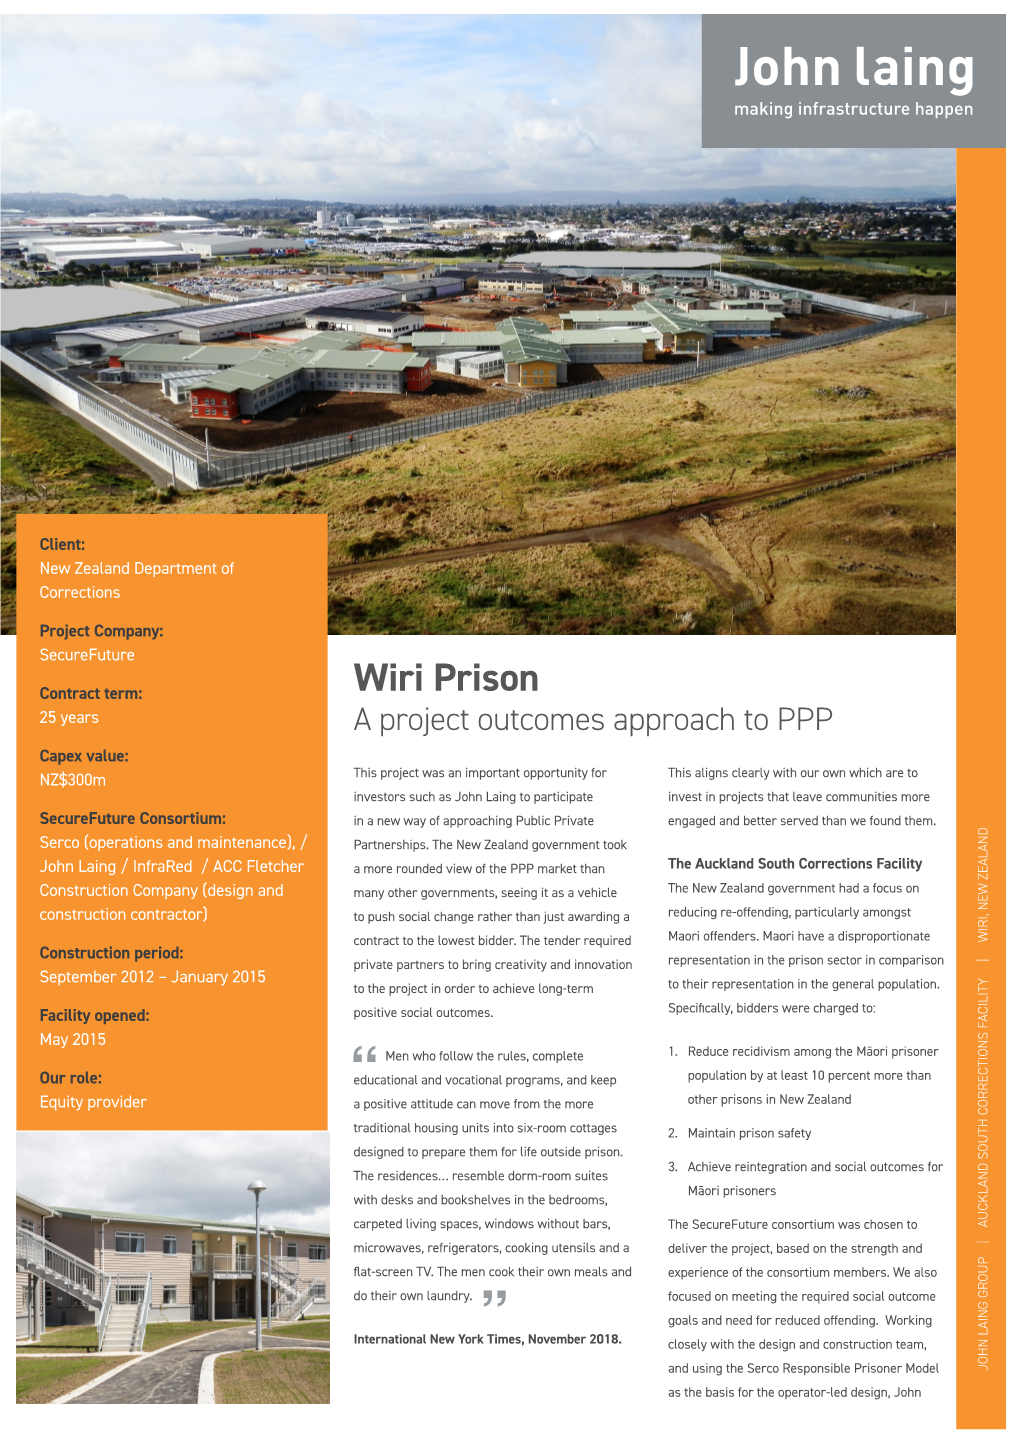 JLG Wiri Prison